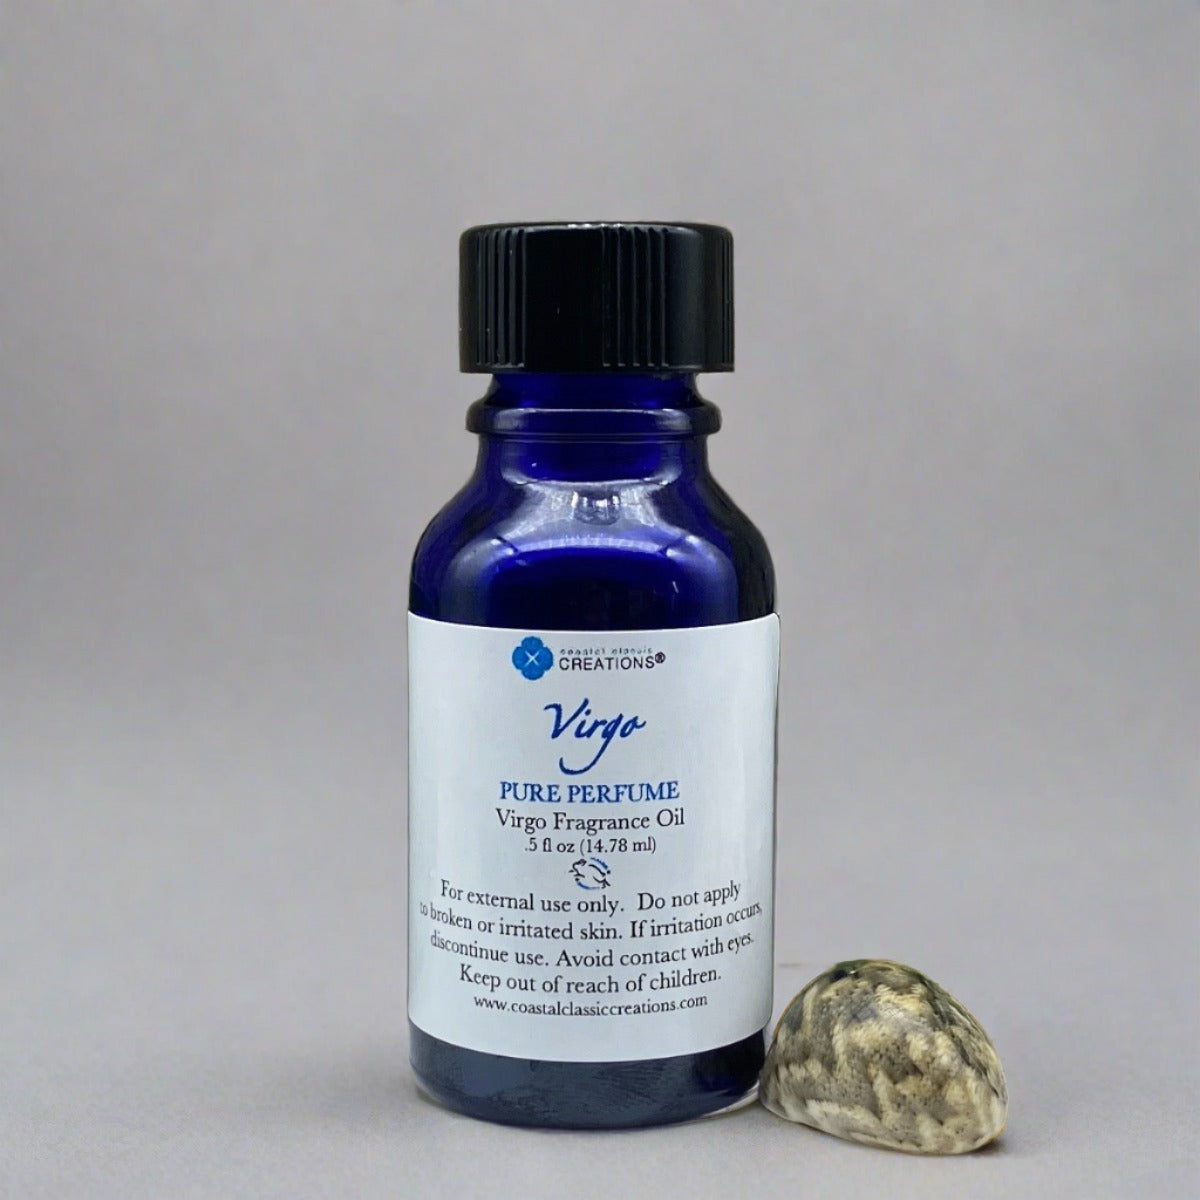 Virgo Perfume, an earthy lavender blend